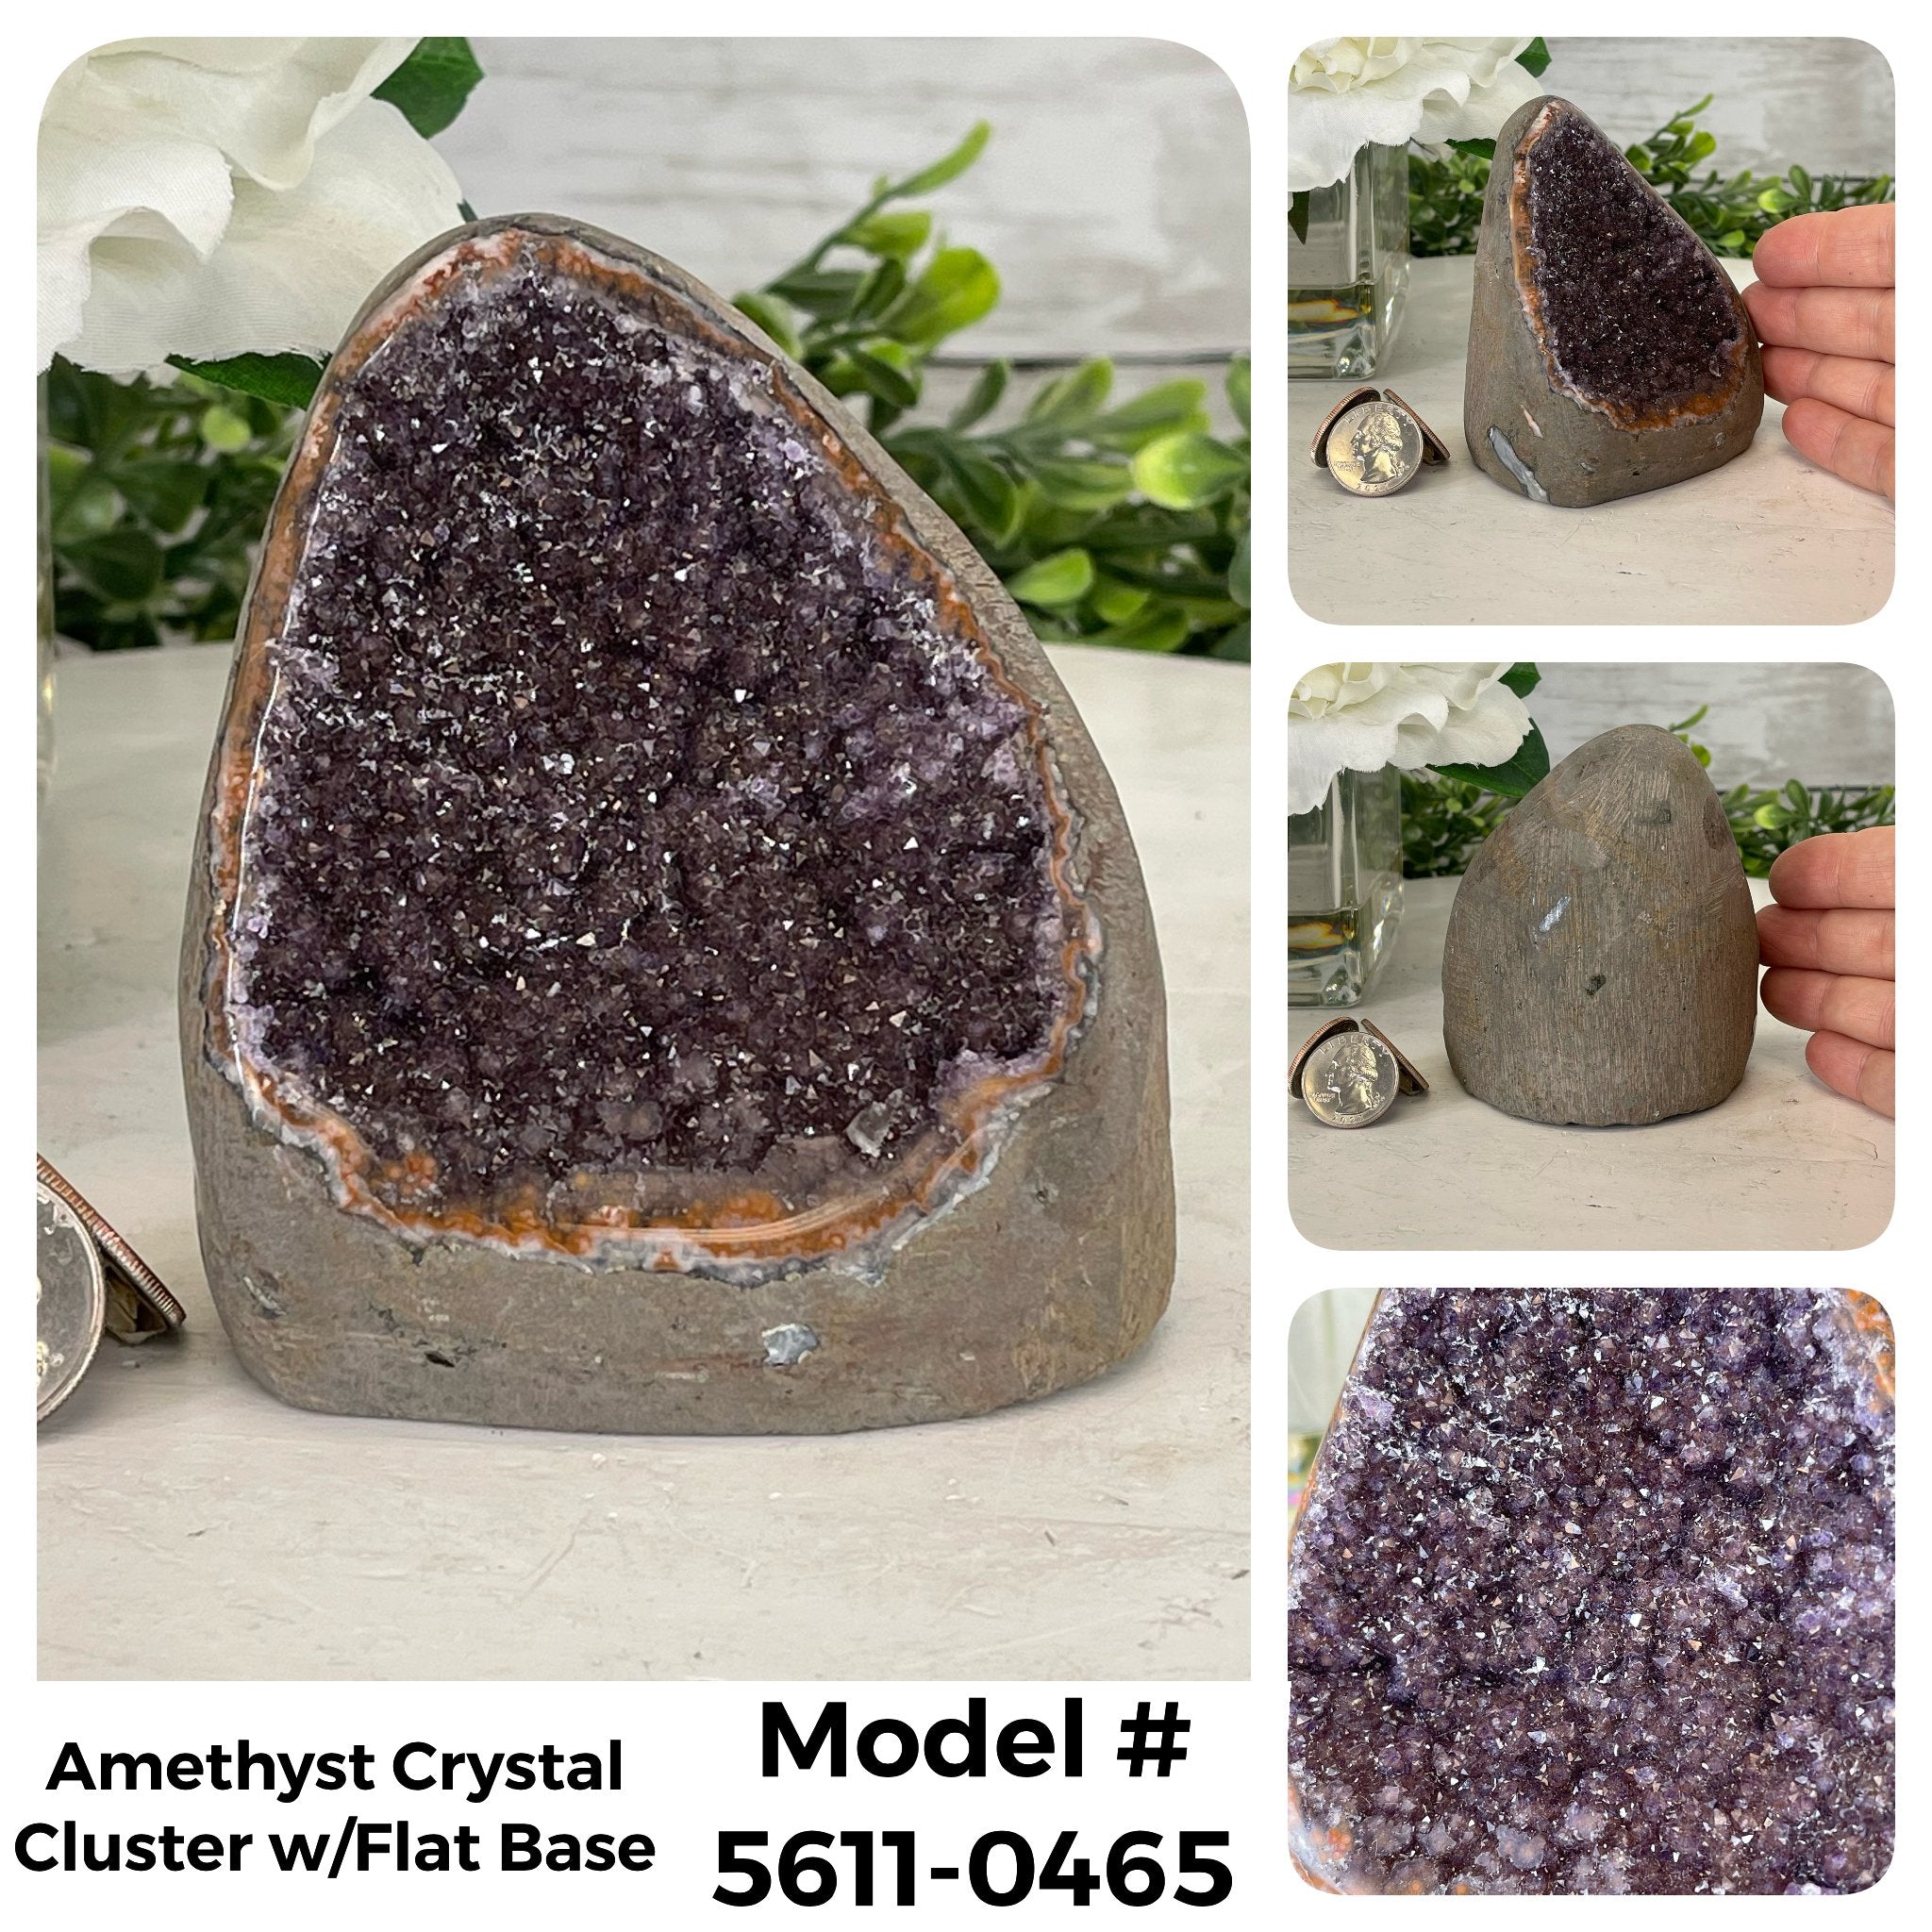 Small Super Quality Amethyst Crystal Cluster w/ flat base, Various Options #5611SQ - Brazil GemsBrazil GemsSmall Super Quality Amethyst Crystal Cluster w/ flat base, Various Options #5611SQSmall Clusters with Flat Bases5611-0465